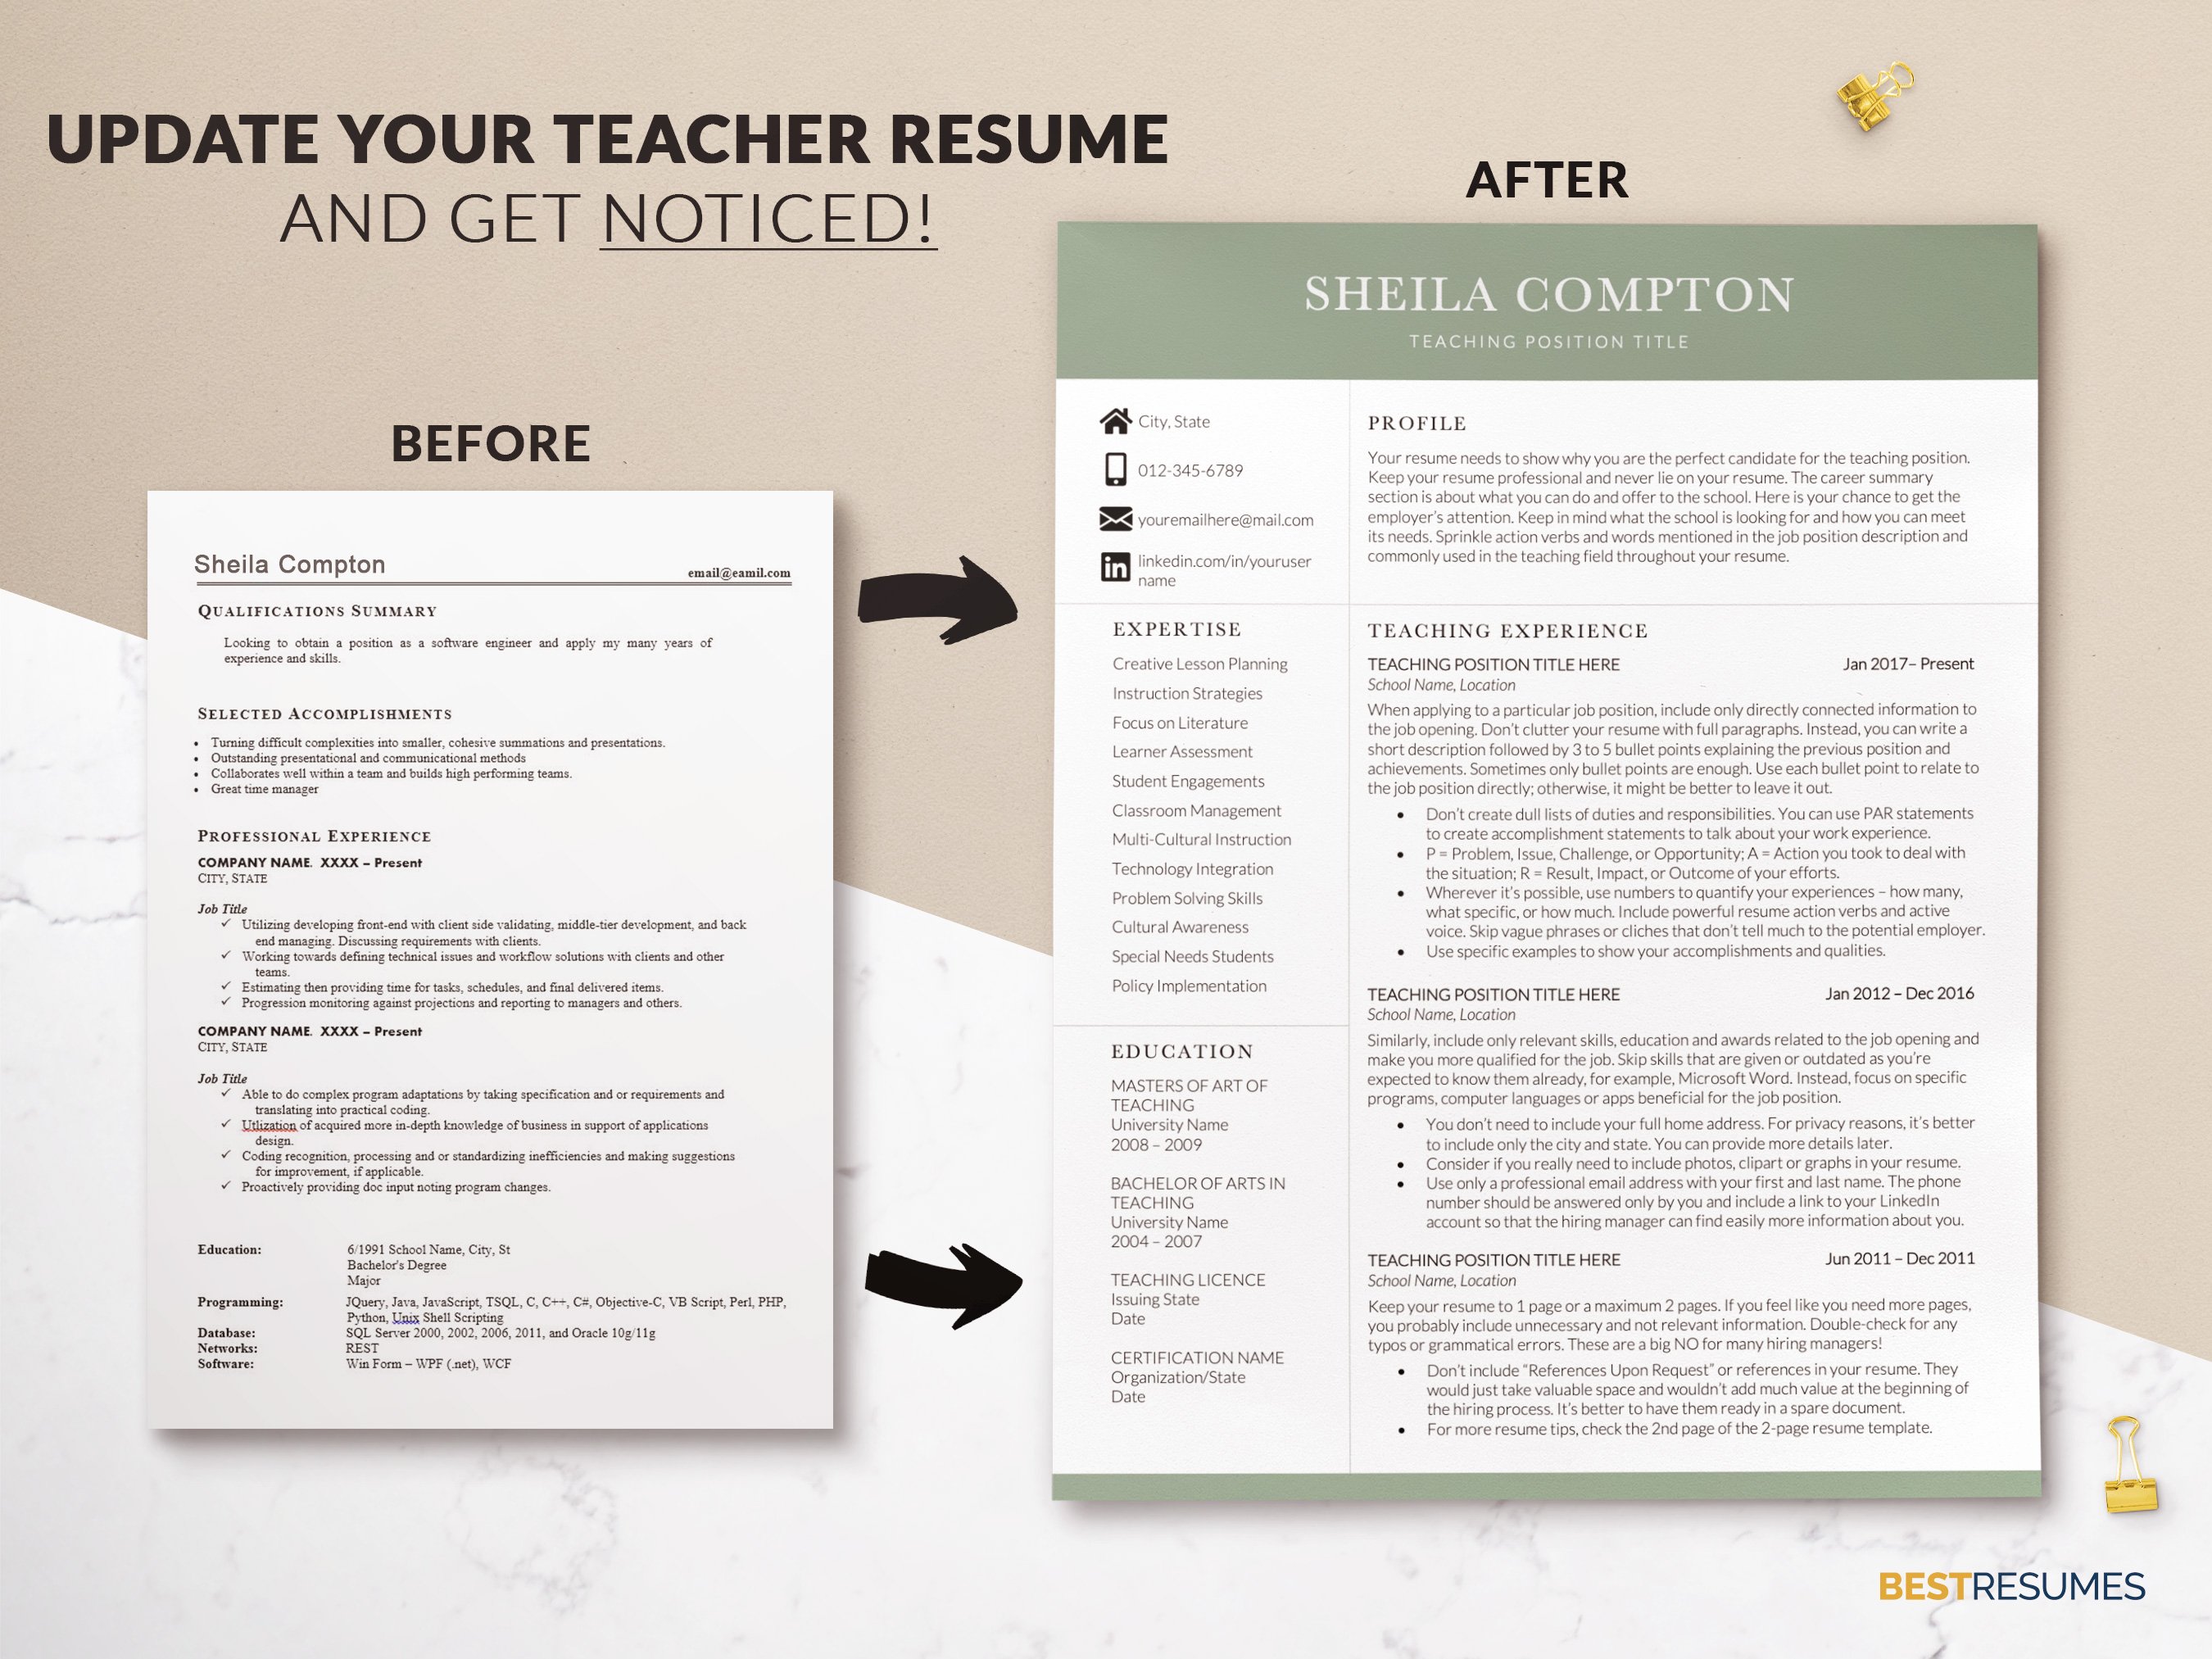 teaching resume template update your teacher resume sheila compton 545